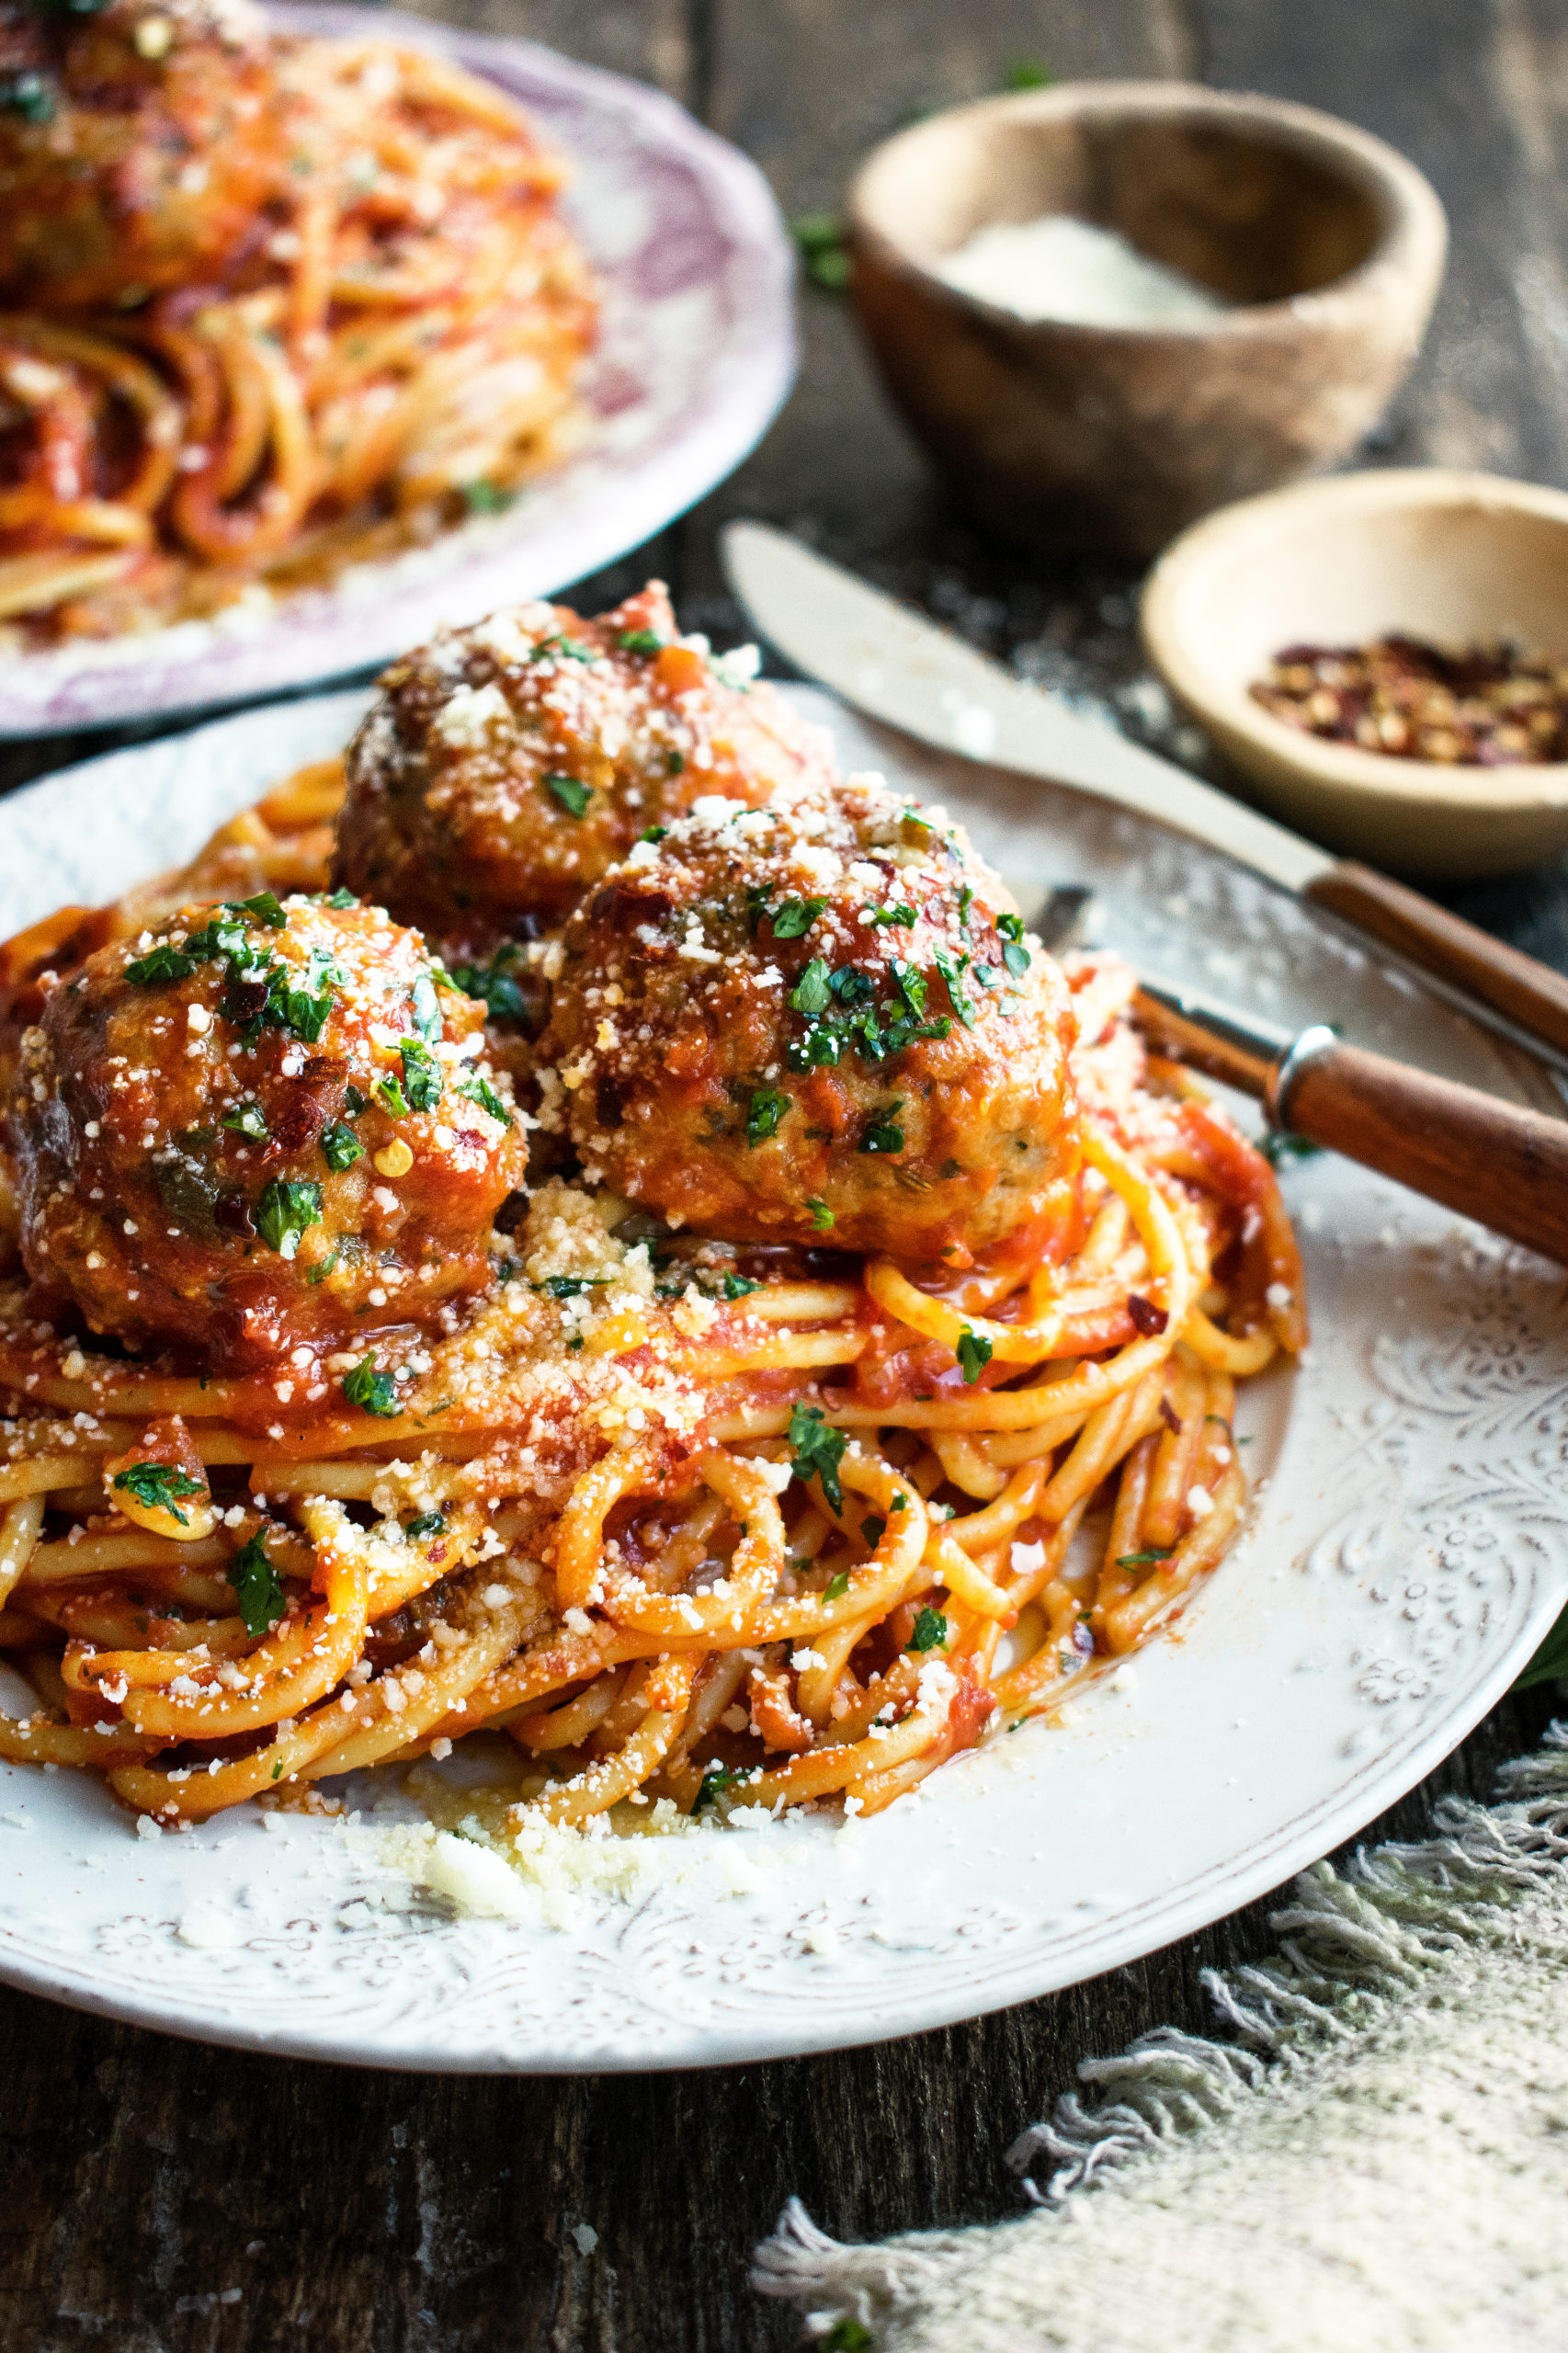 Spaghetti &amp; Meatballs with Spicy Tomato Sauce - The Original Dish